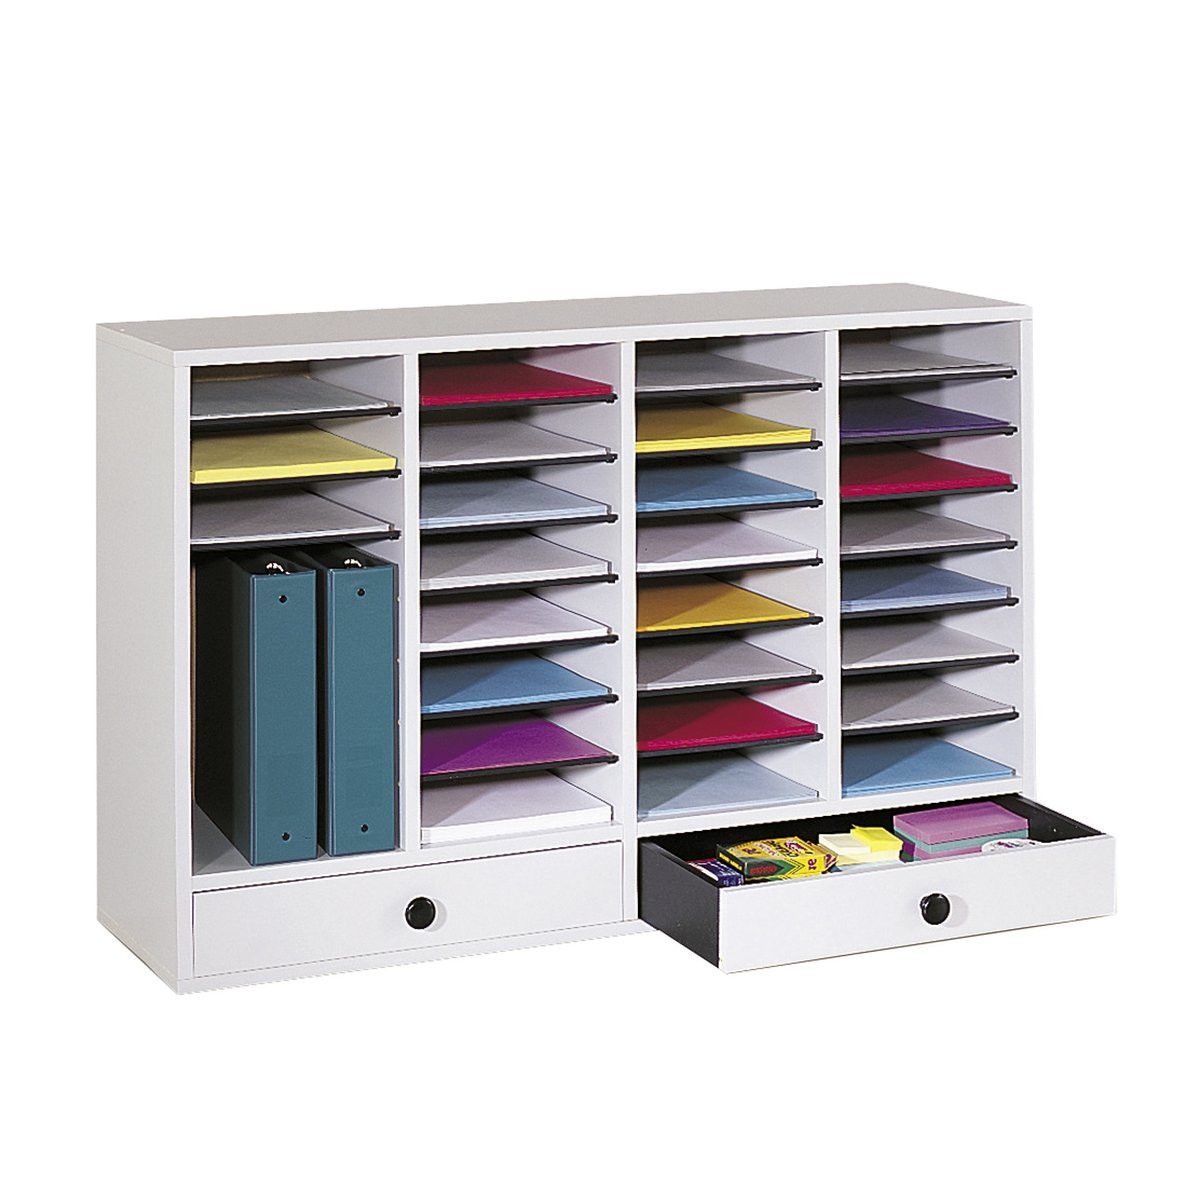 Office Shelf Organizer
 Safco 9494 Wood Adjustable Literature Organizer fice